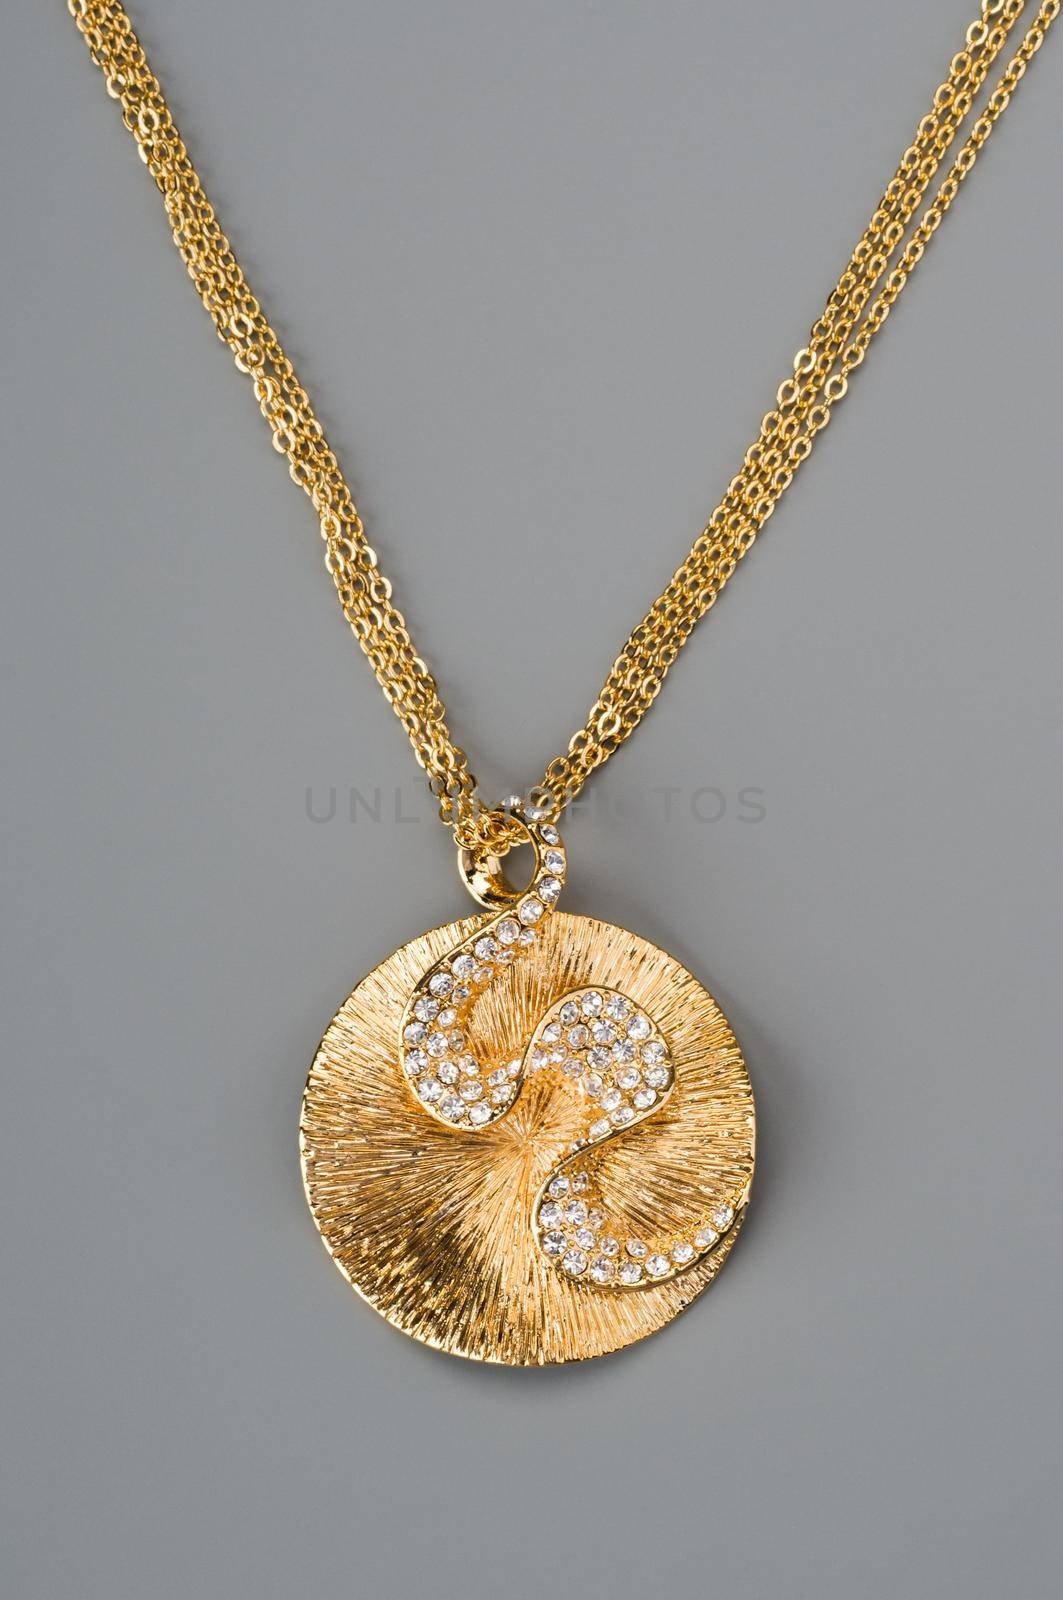 Golden pendant on a chain by nikitabuida